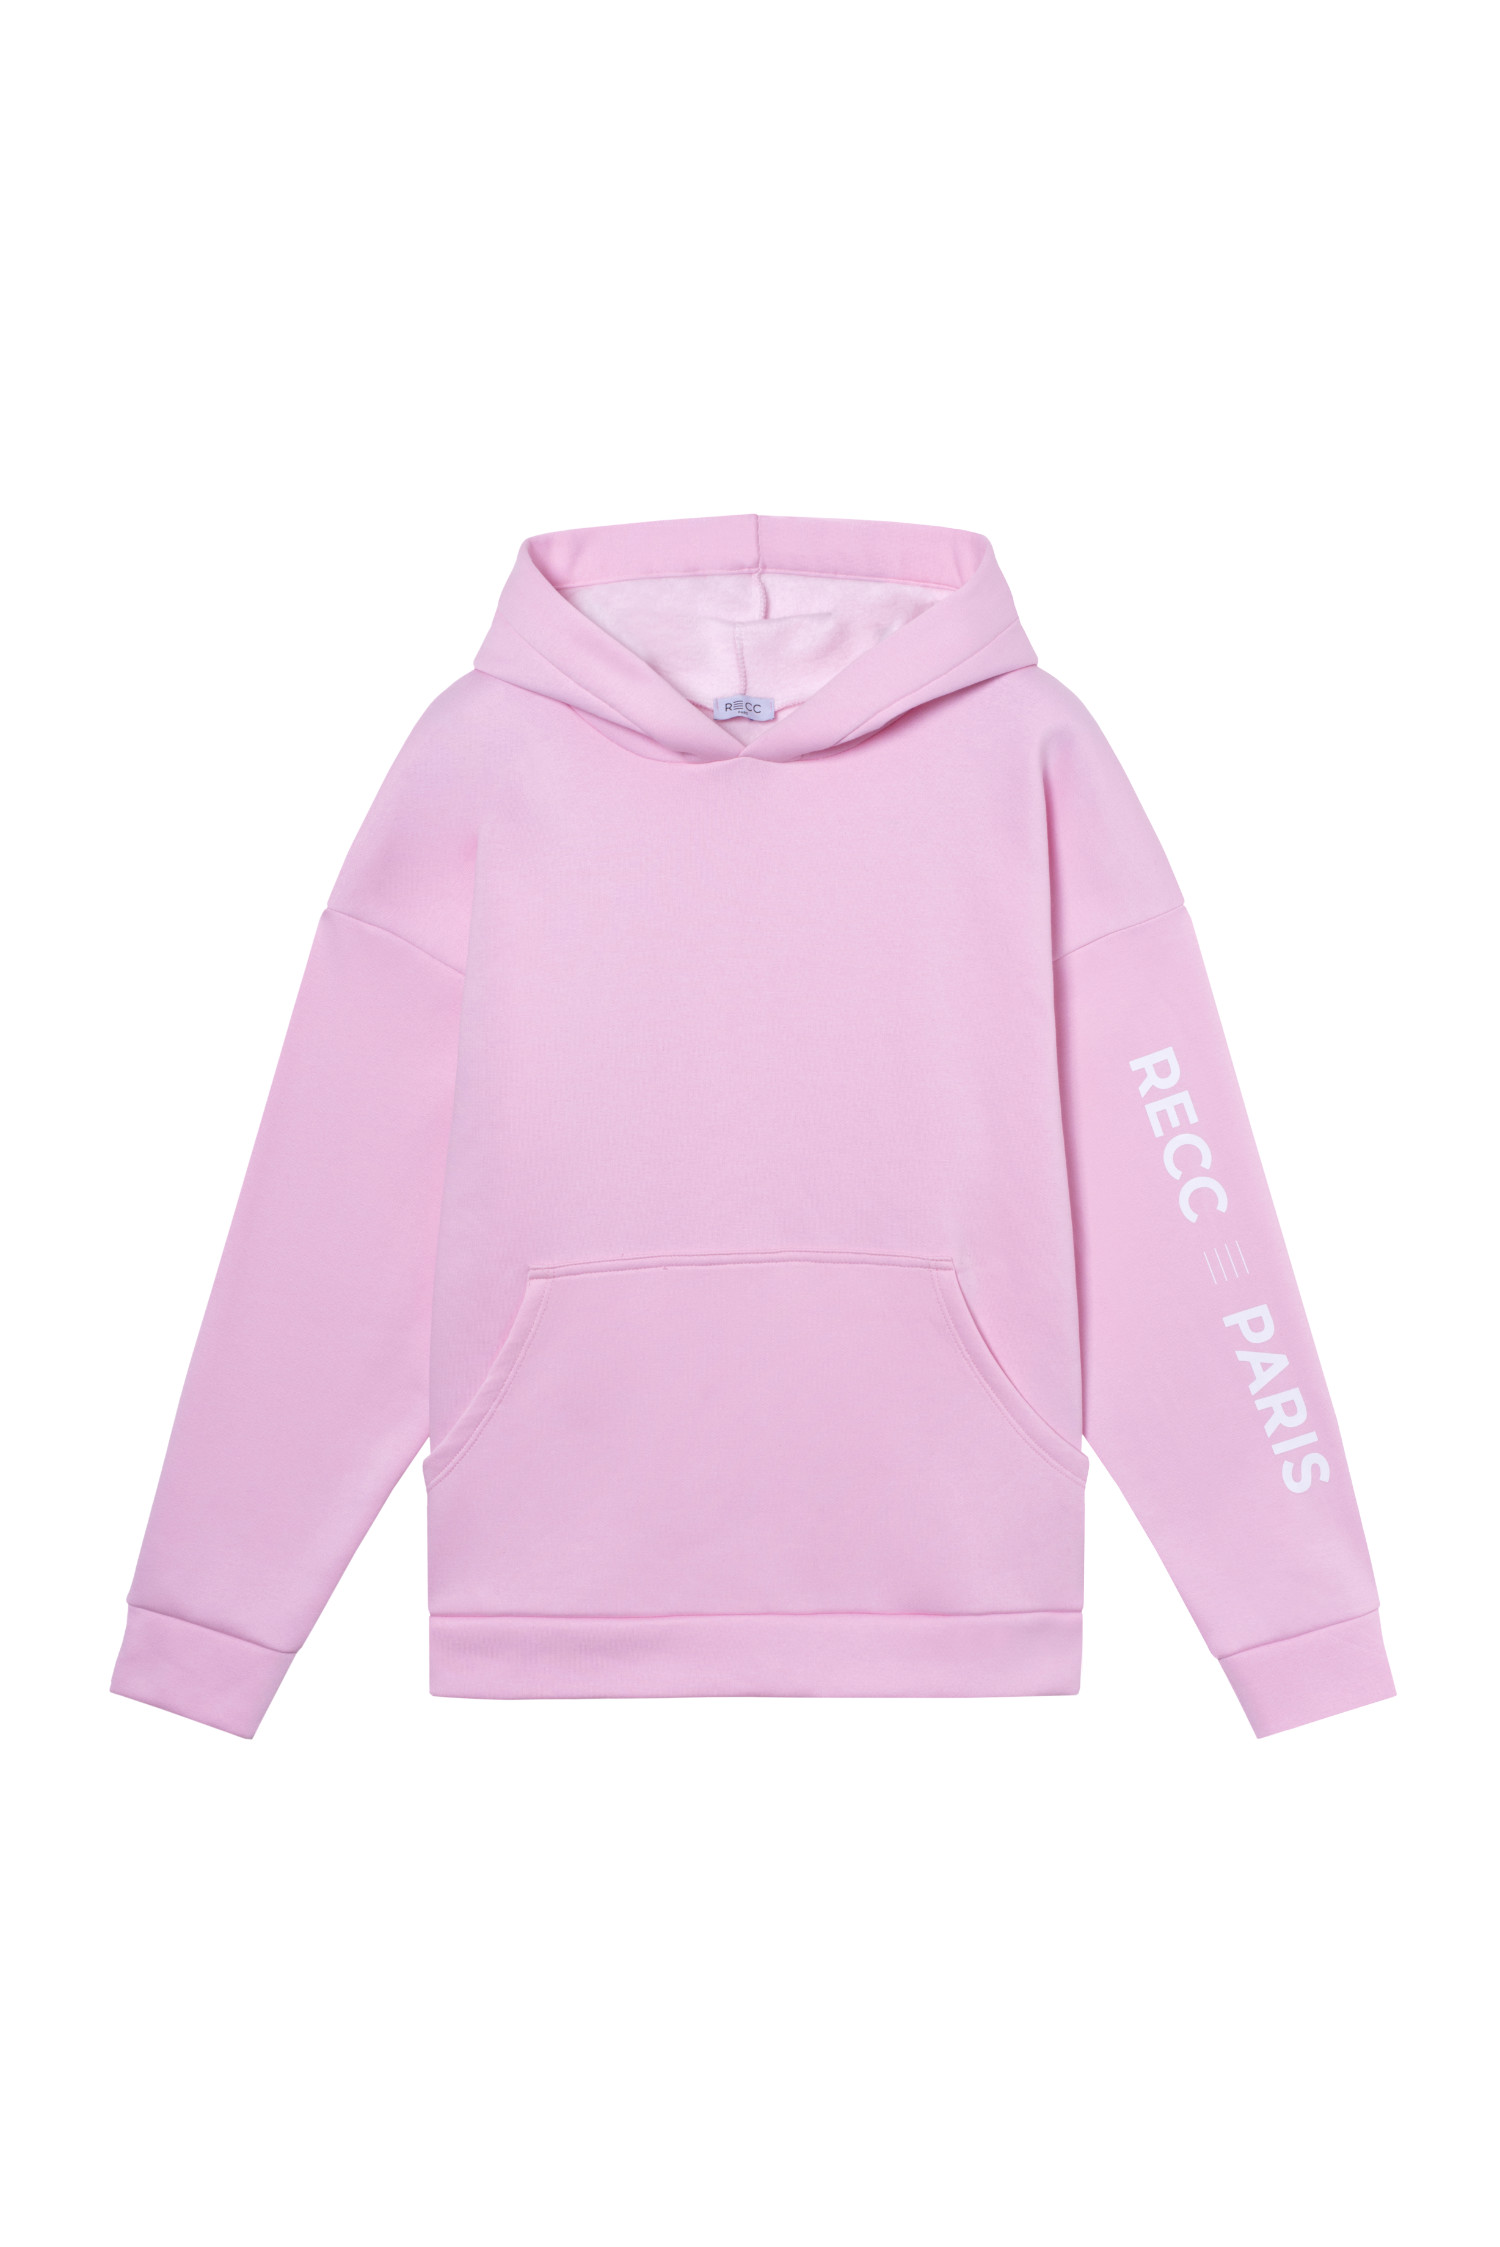 RECC Paris Pink Sweater